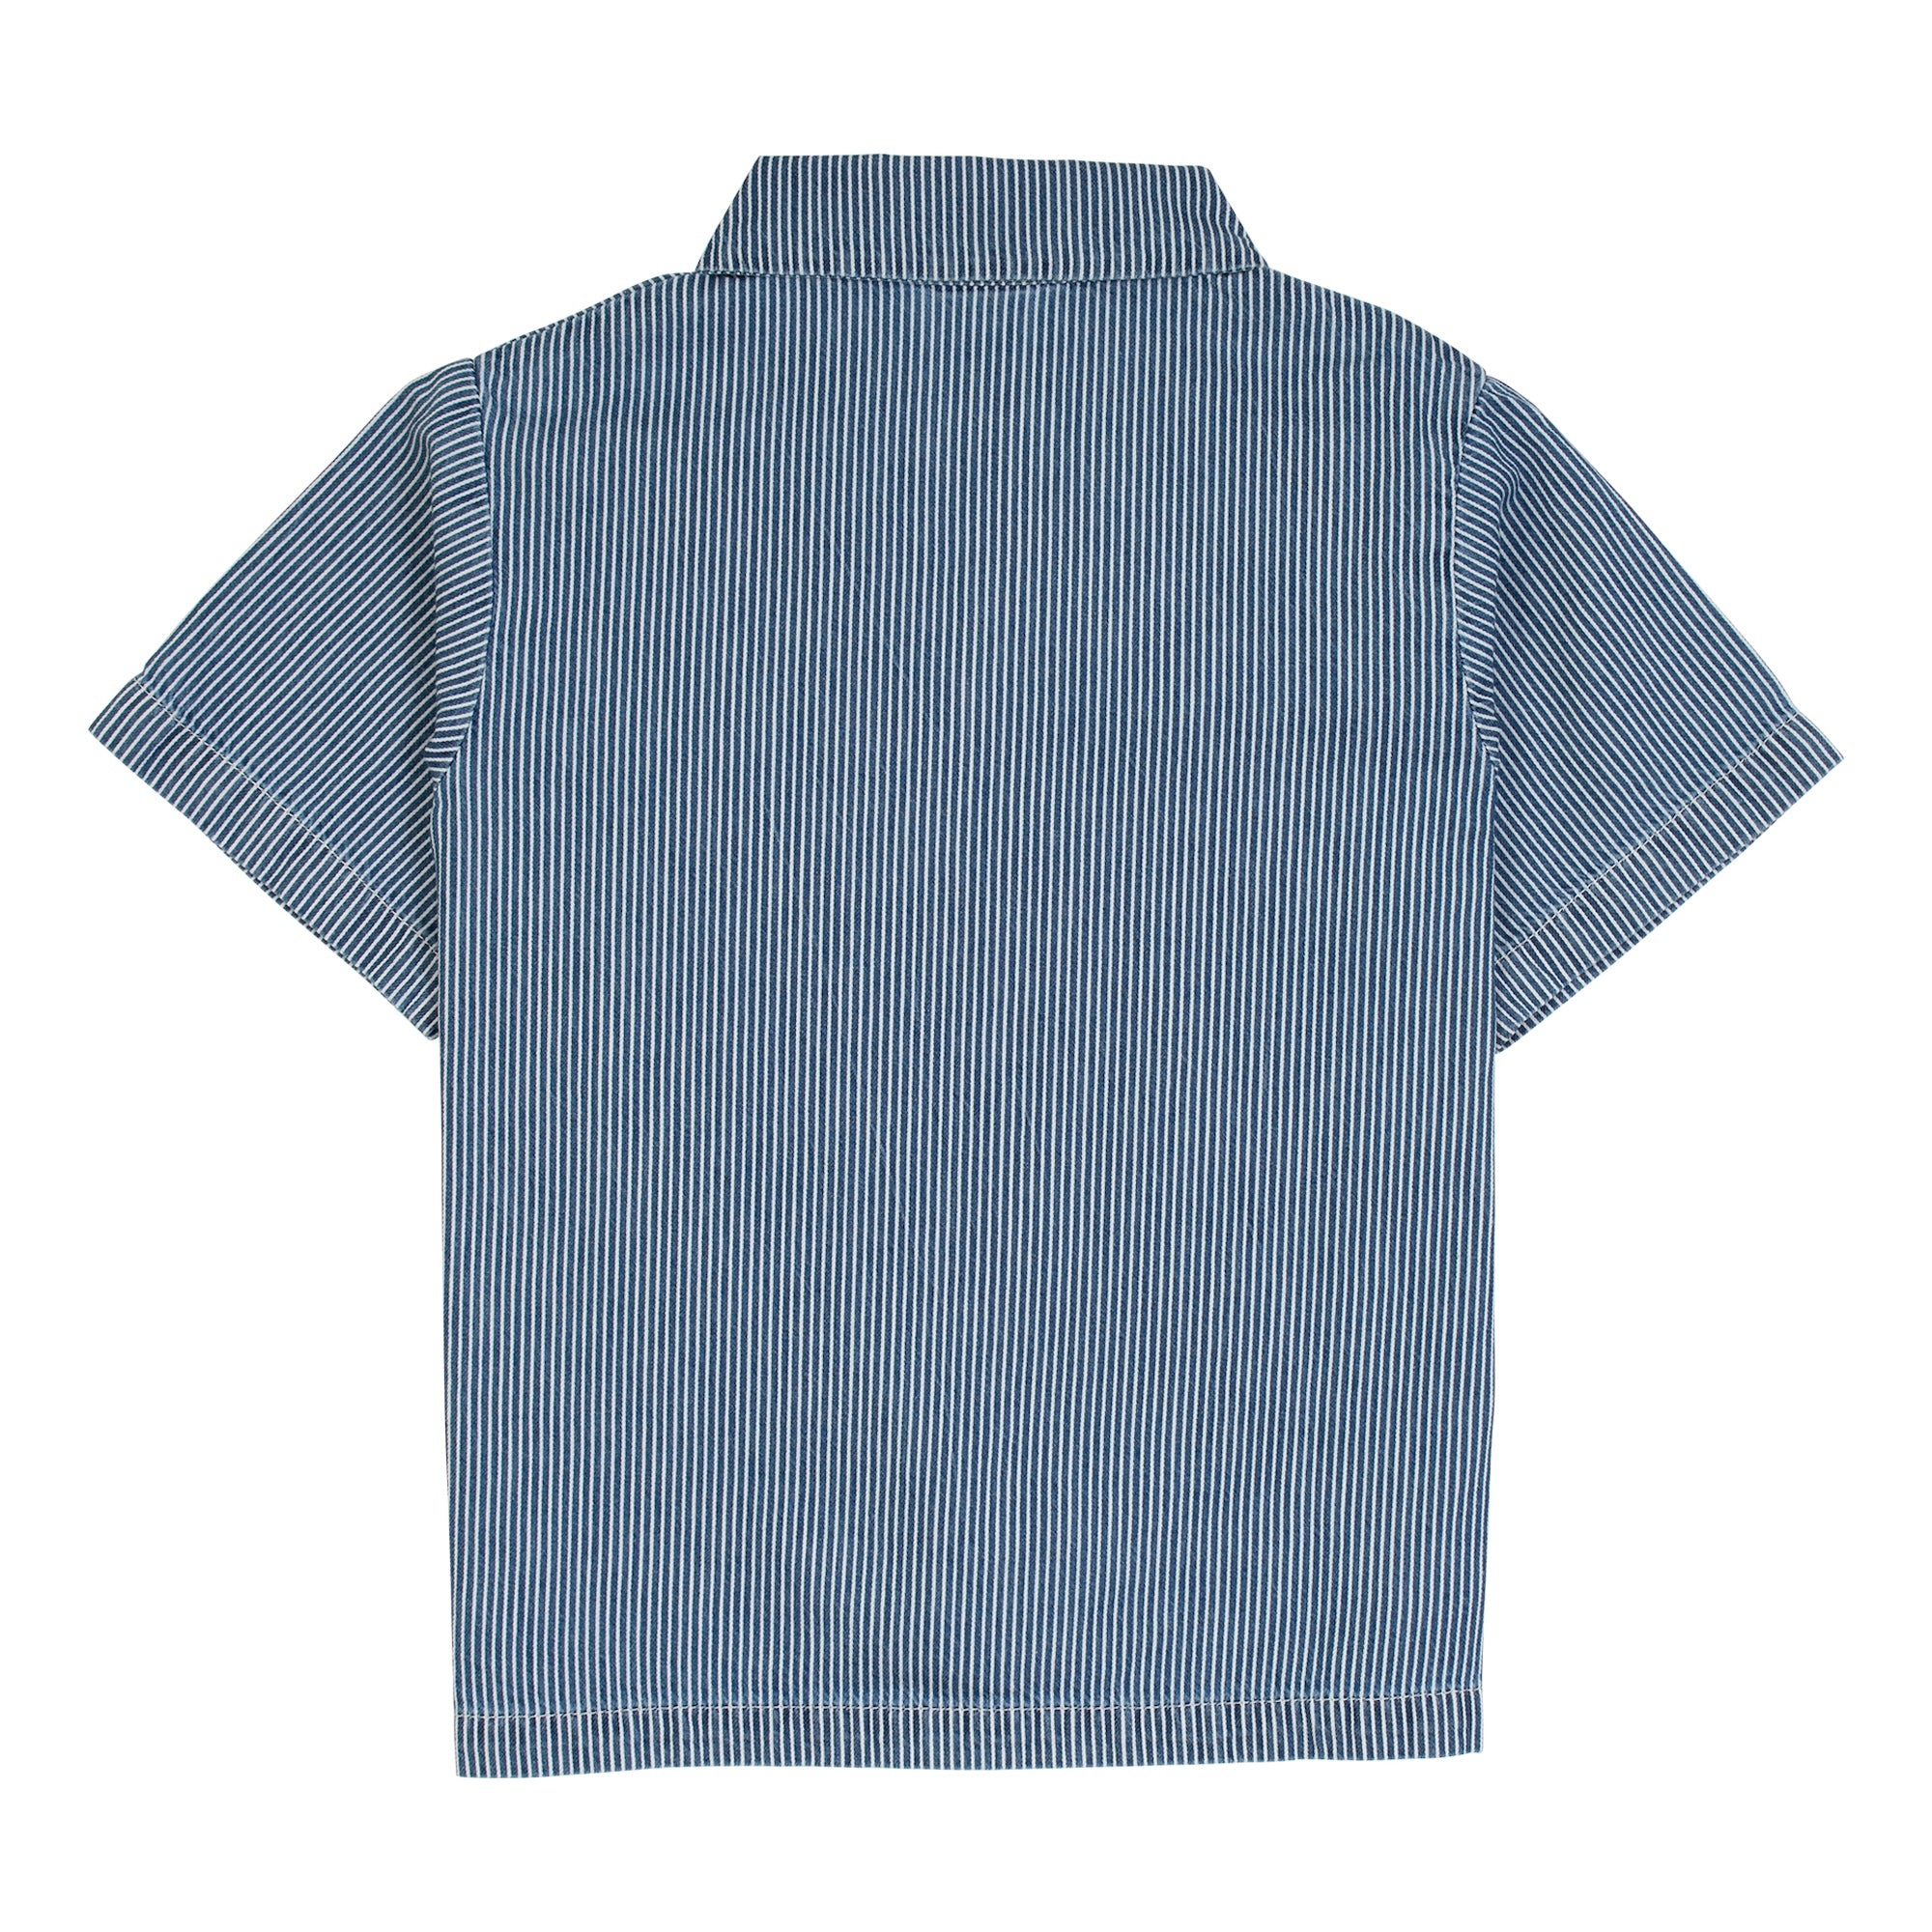 Corda Hickory Shirt - Multi Stripe Hickory